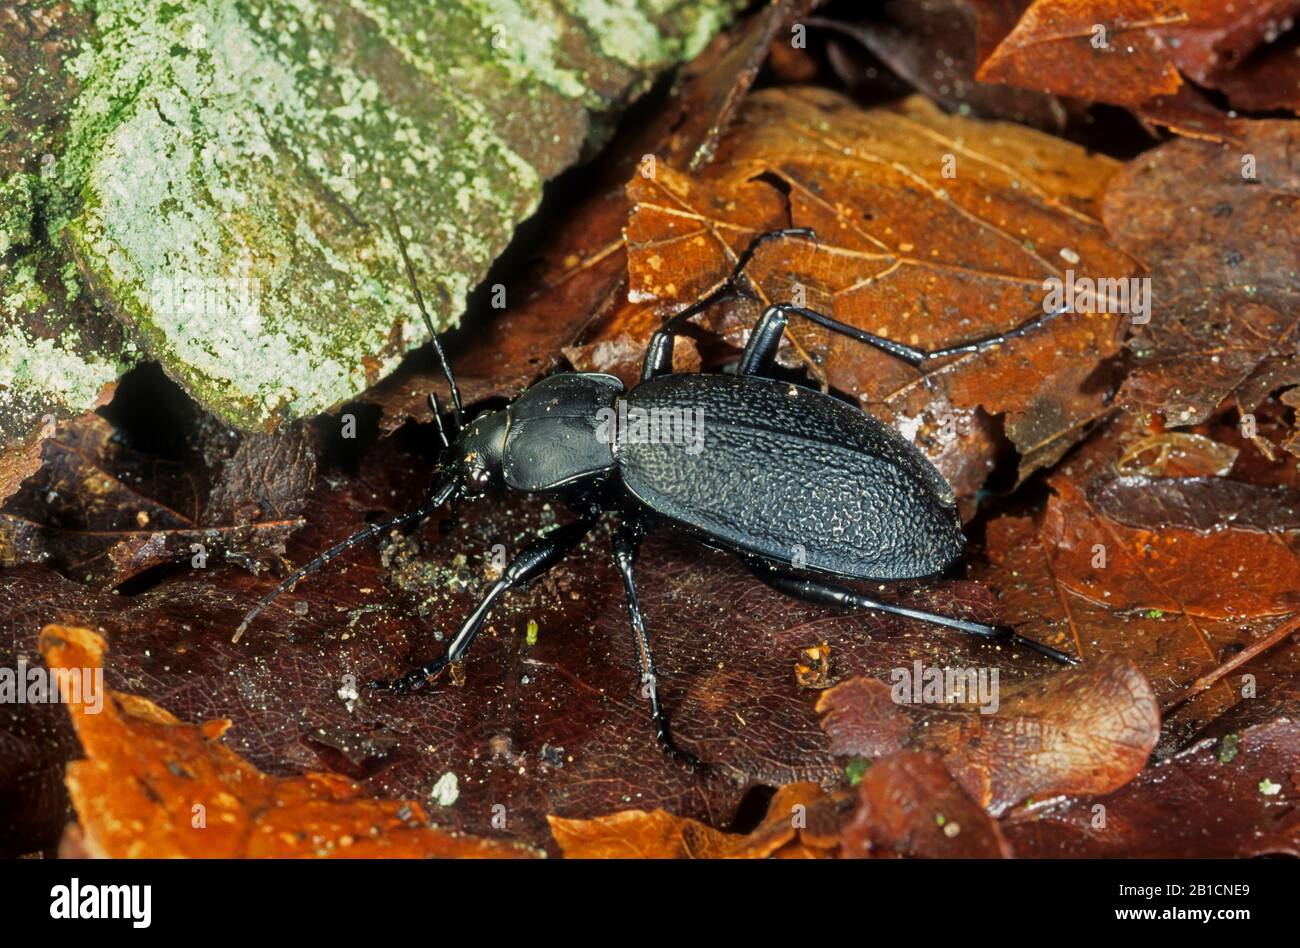 leatherback ground beetle (Carabus coriaceus), sitting on autumn foliage, side view, Germany Stock Photo